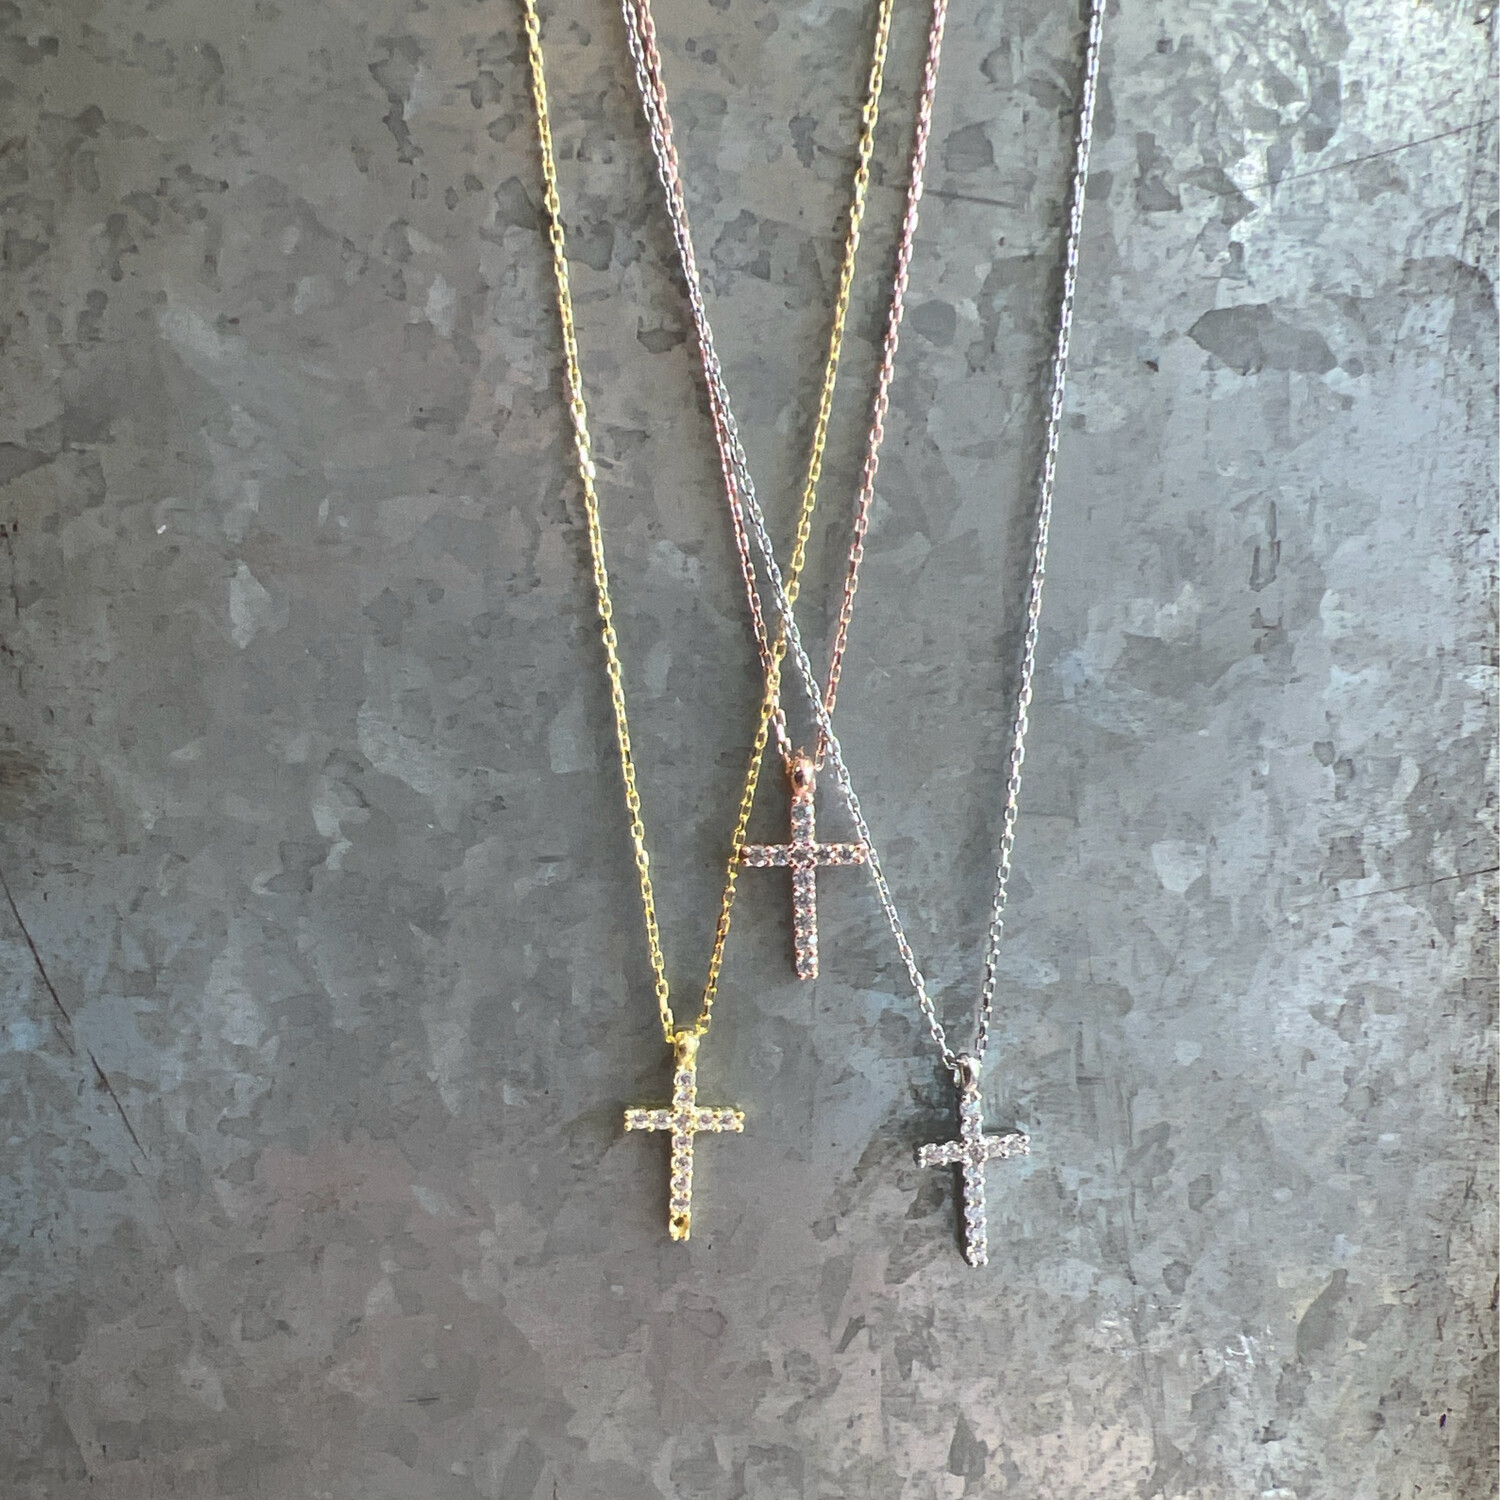 Petite Rhinestone Cross Necklace